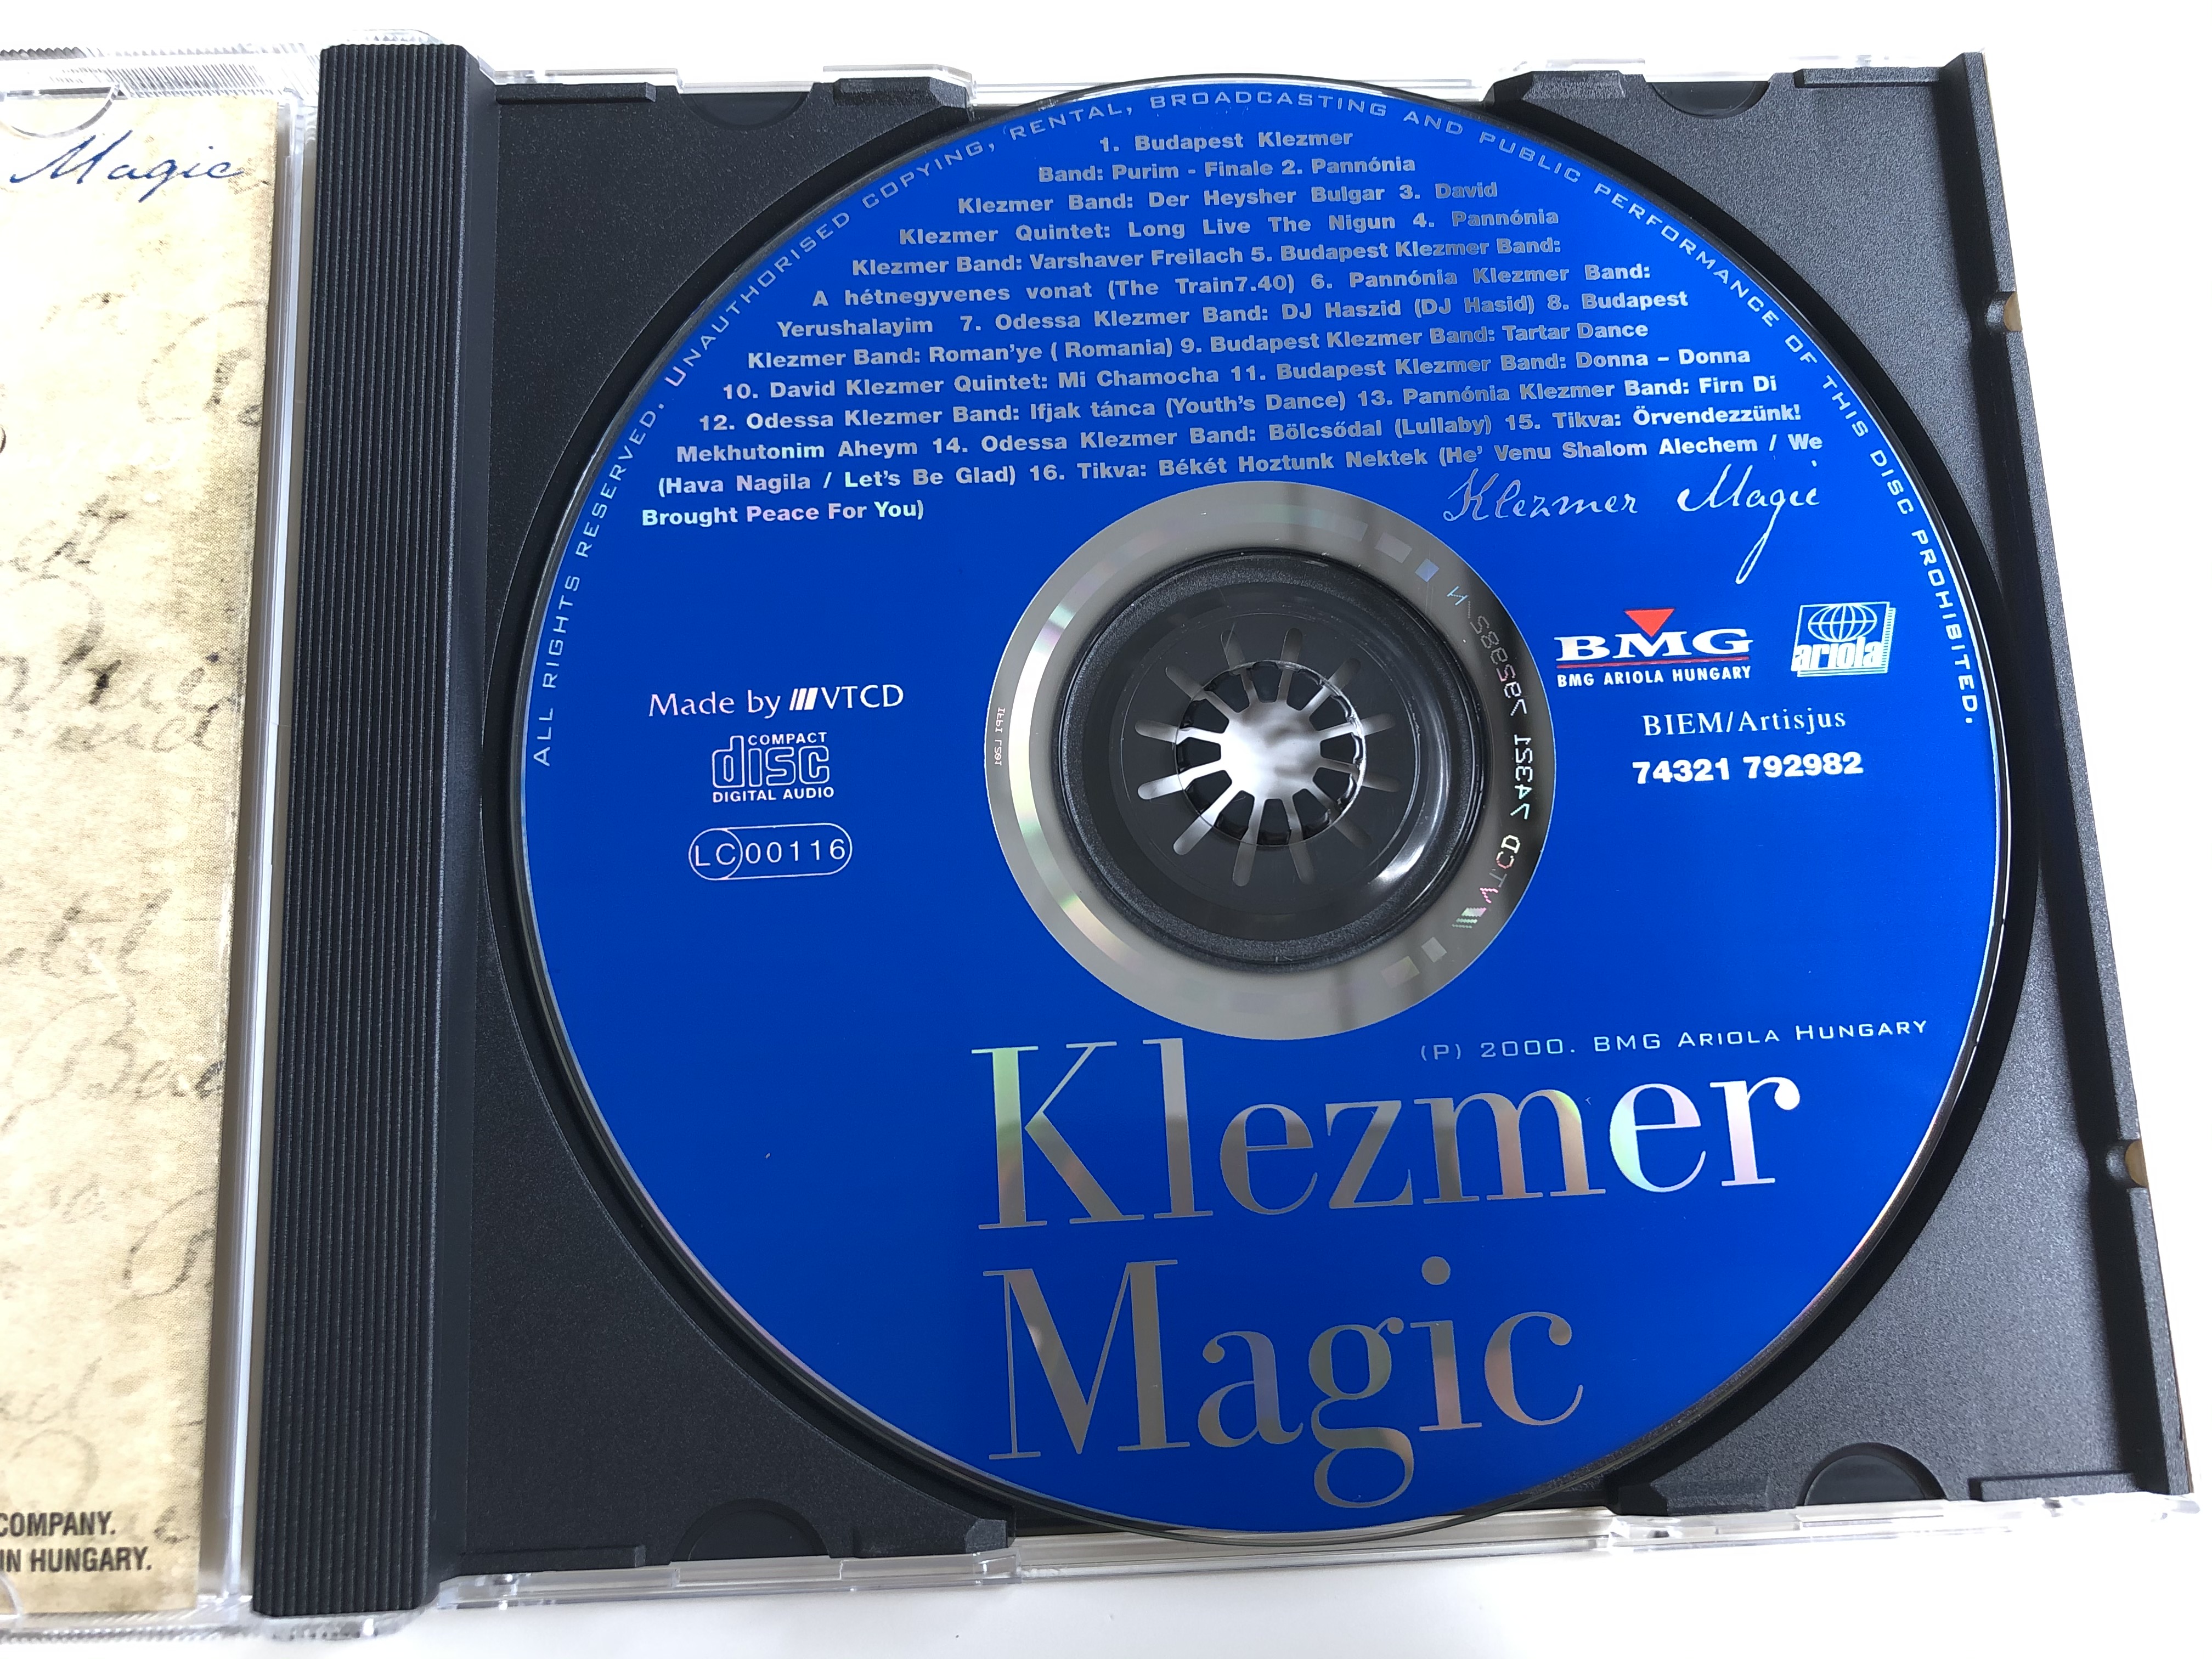 klezmer-magic-a-collection-of-the-best-klezmer-music-from-hungary-budapest-klezmer-band-pannonia-klezmer-band-odessa-klezmer-band-david-klezmer-quintet-bmg-ariola-hungary-audio-cd-2000-4-.jpg